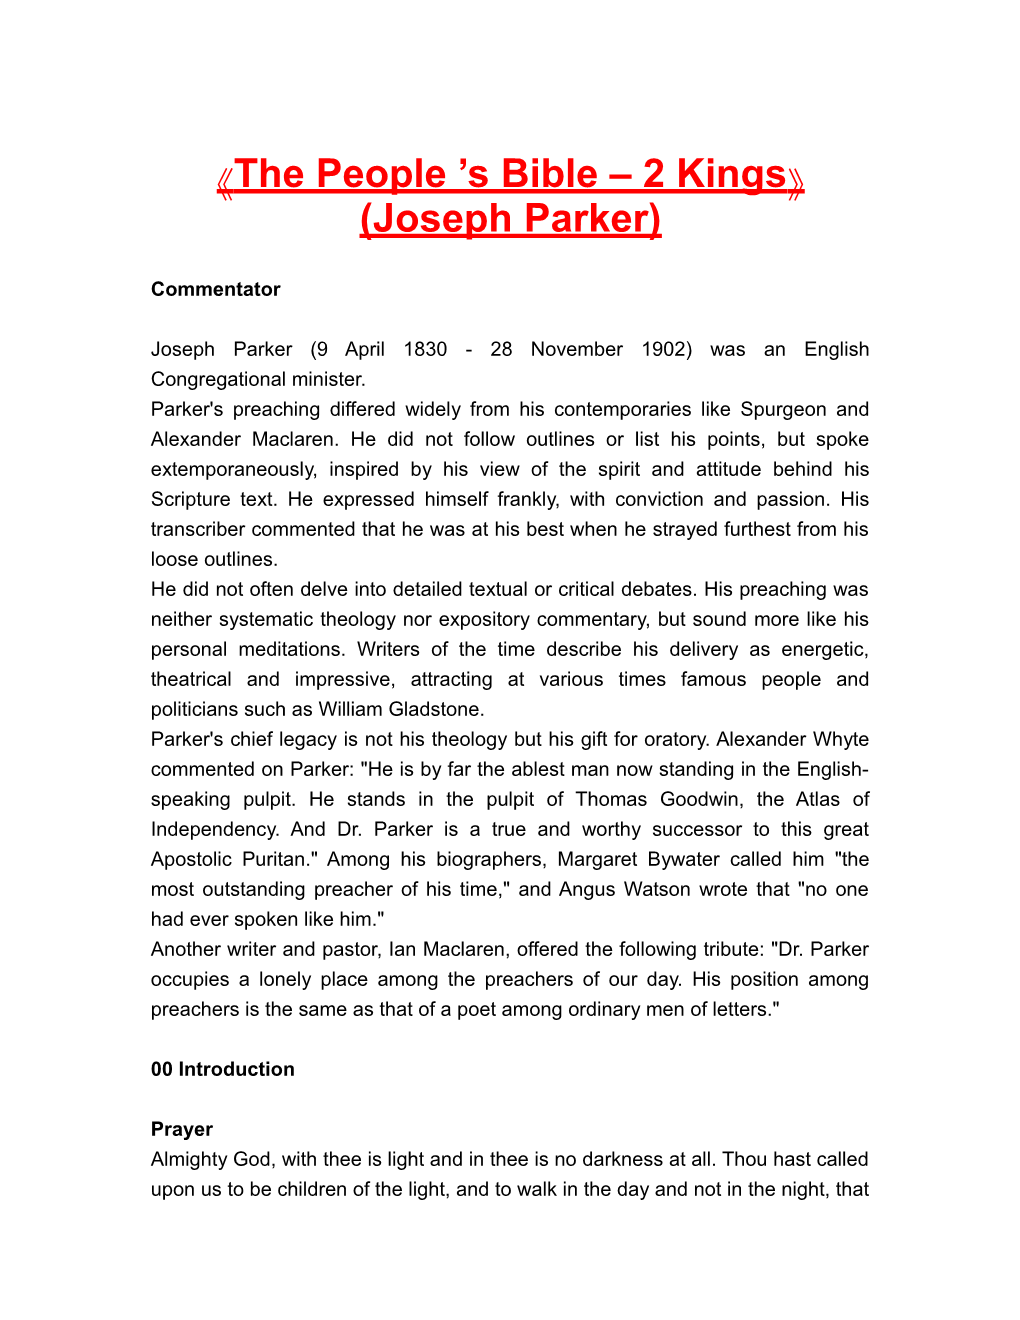 The People S Bible 2 Kings (Joseph Parker)